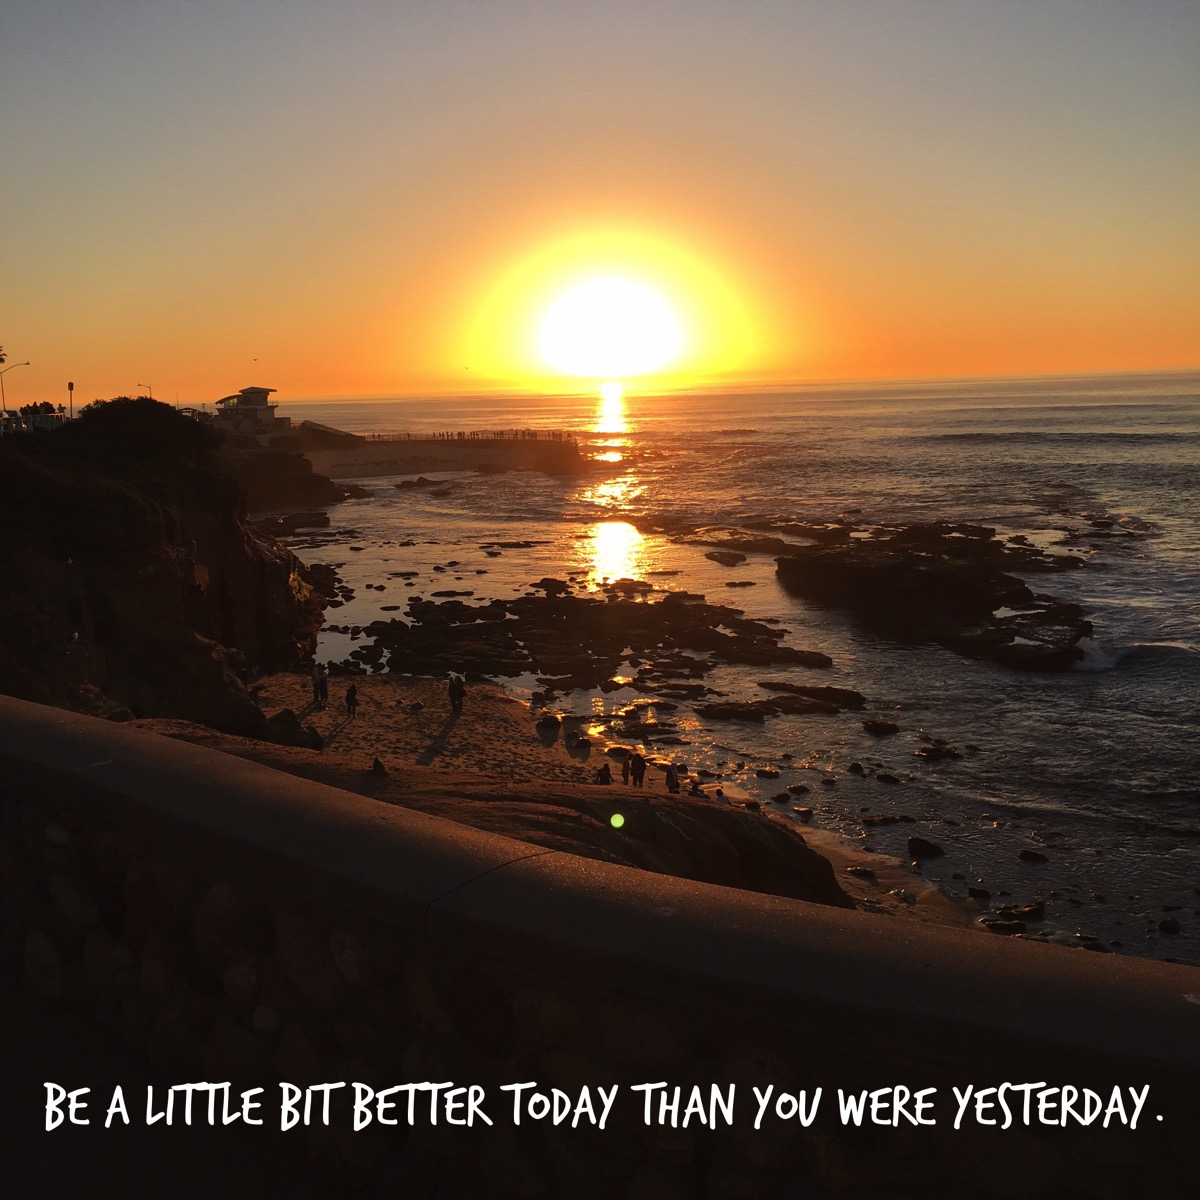 Sunset, La Jolla, California - Be a little bit better today than you were yesterday